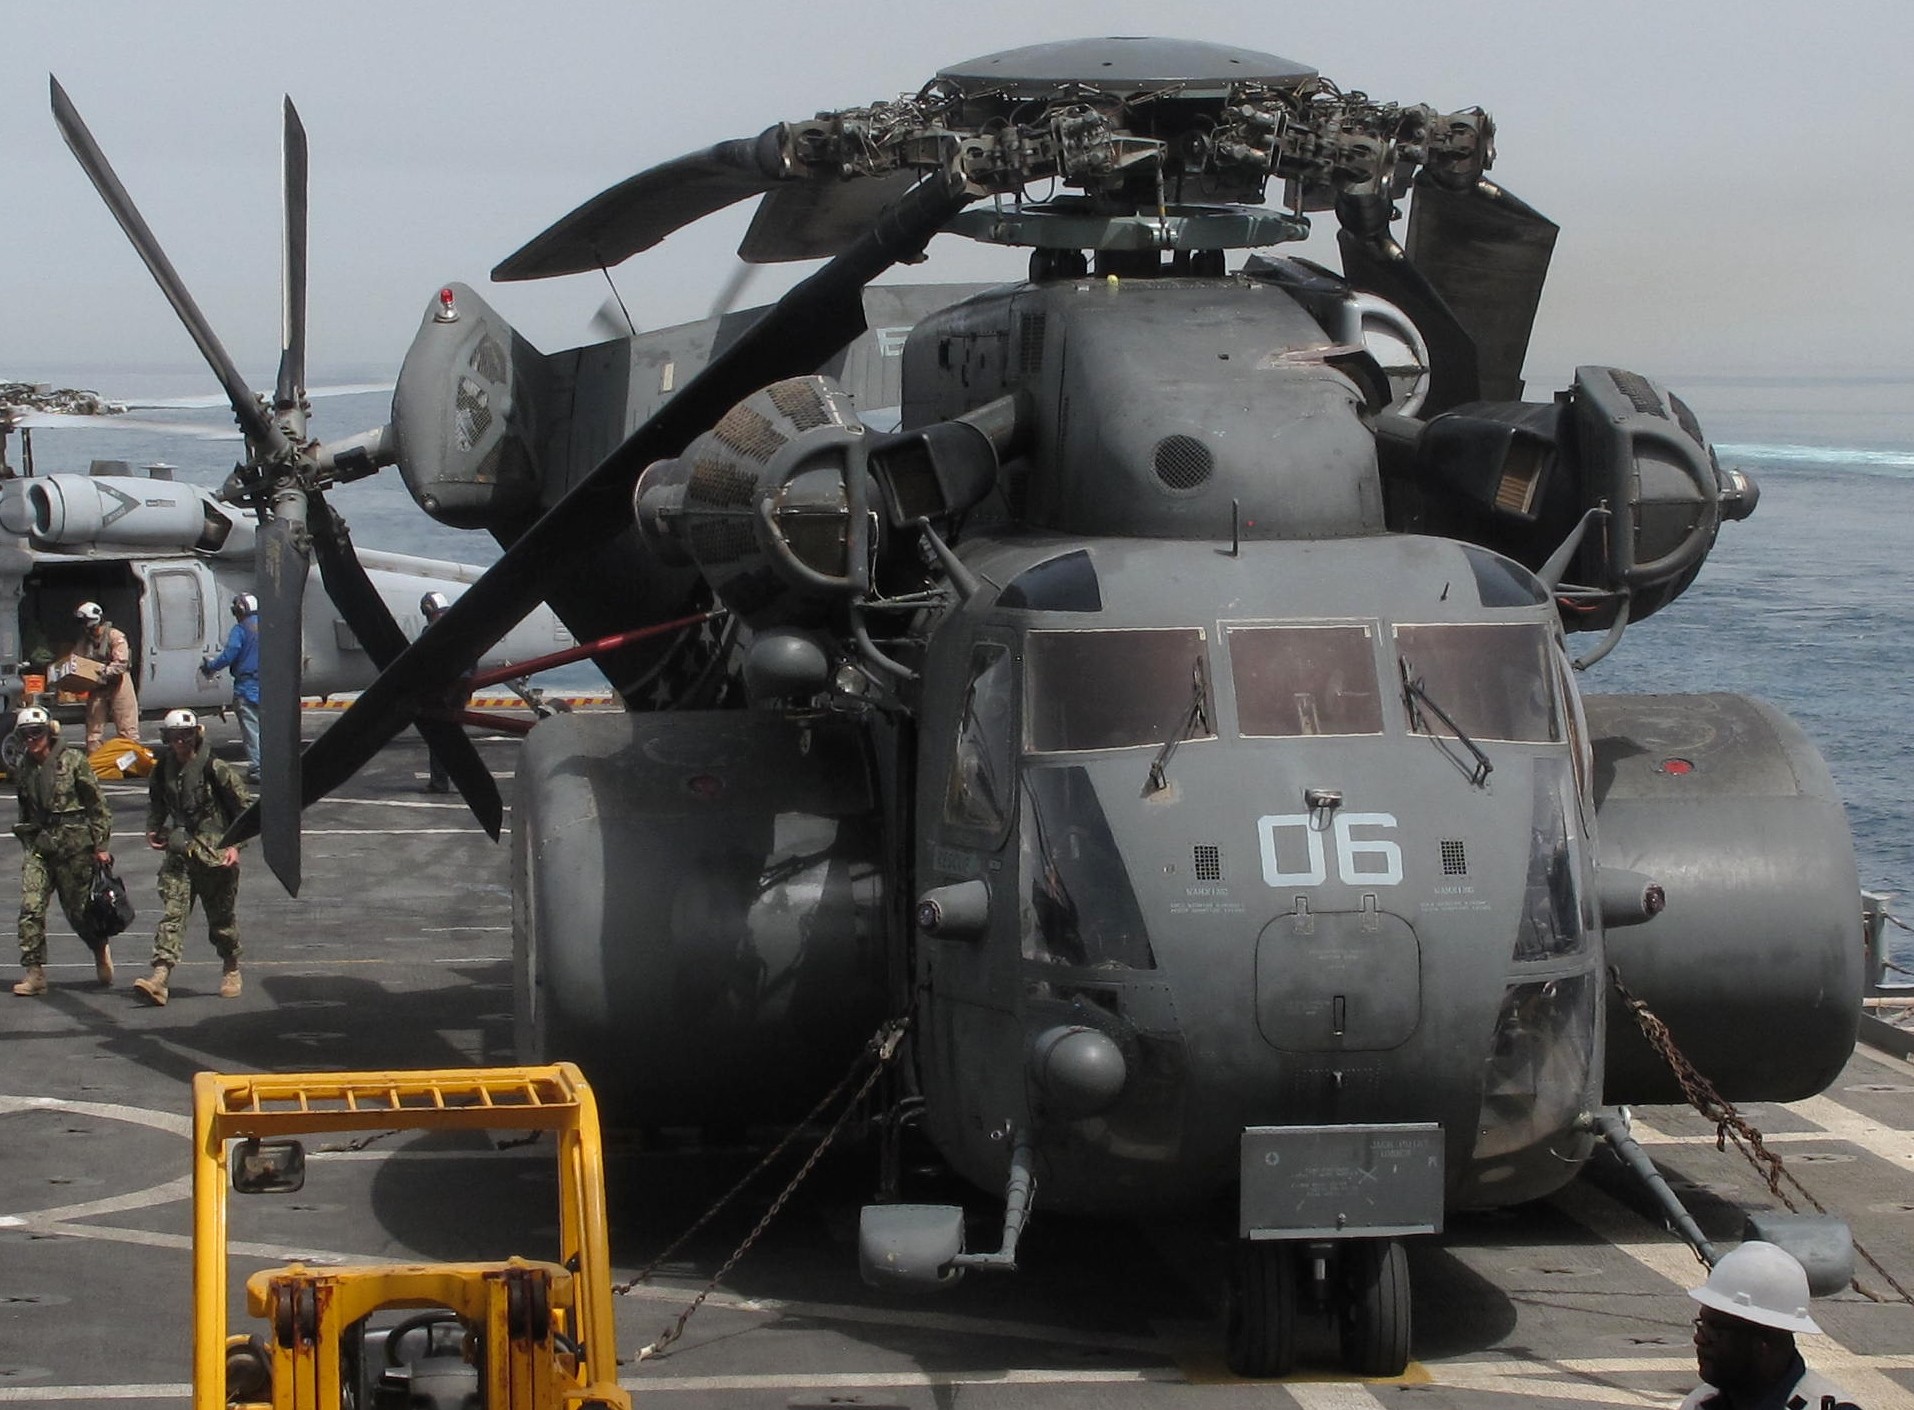 hm-15 blackhawks helicopter mine countermeasures squadron navy mh-53e sea dragon 124